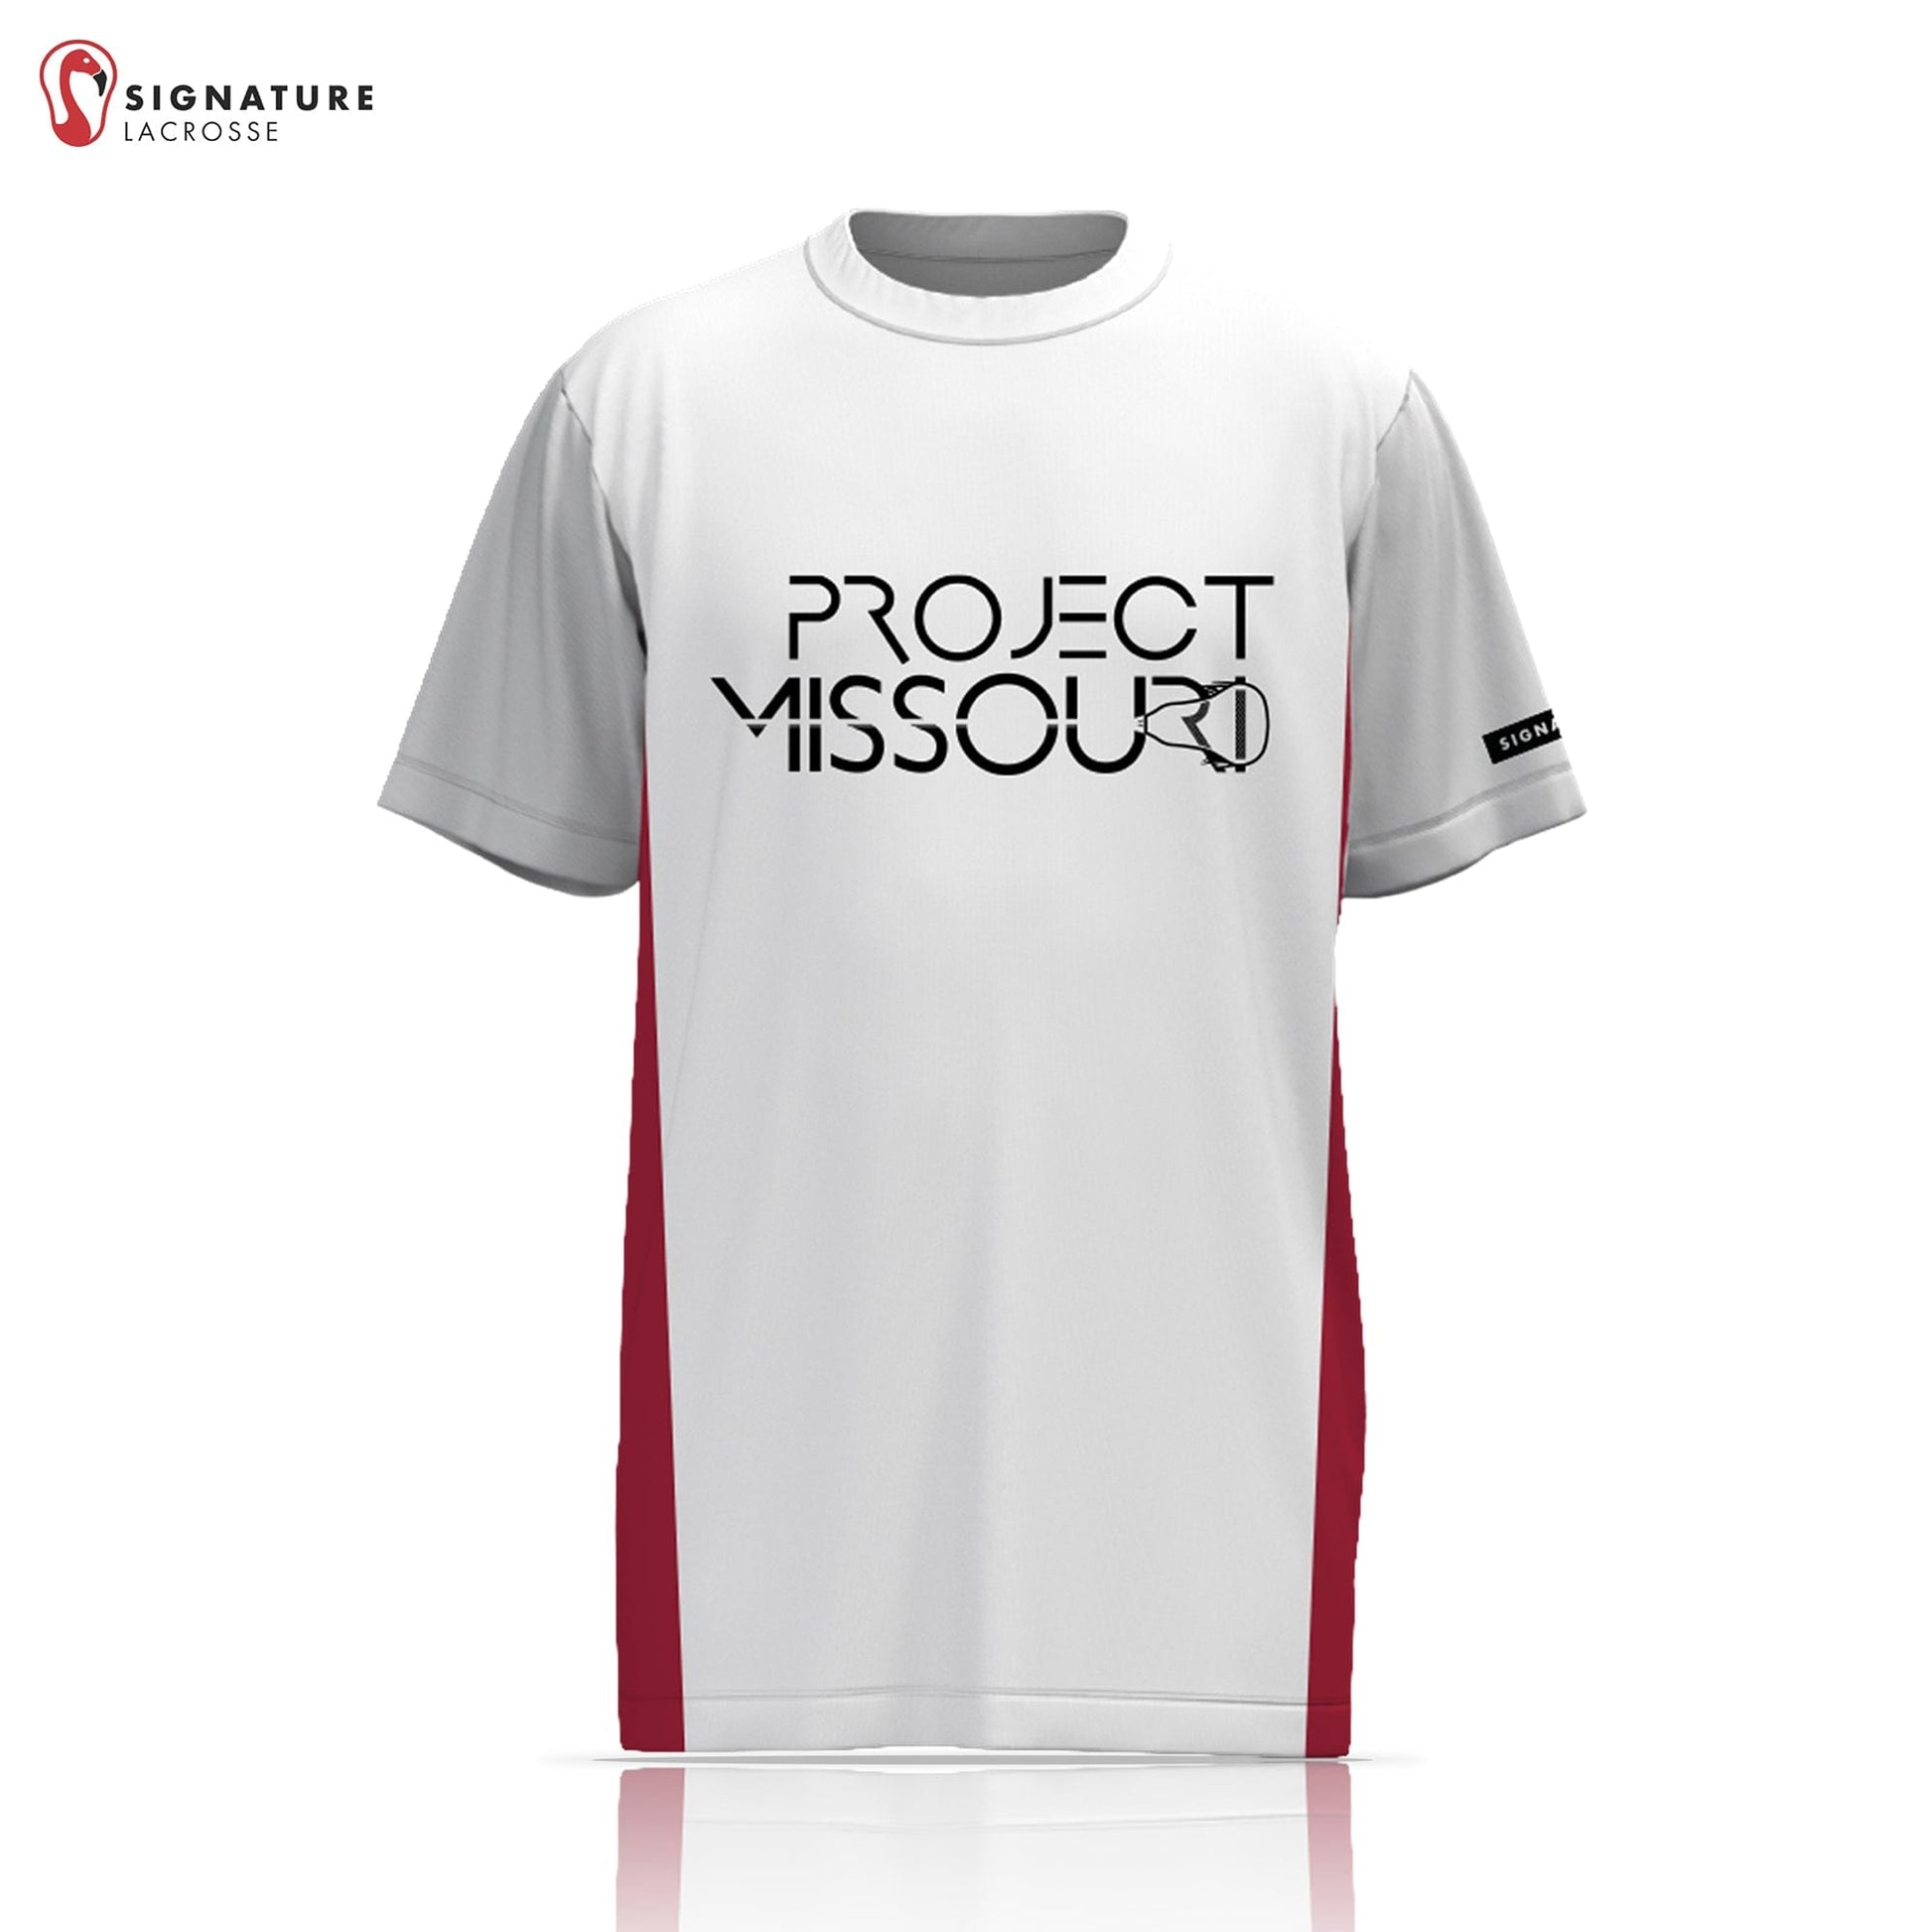 Team KC Lacrosse Men's Player Short Sleeve Shooting Shirt: 2030 Signature Lacrosse